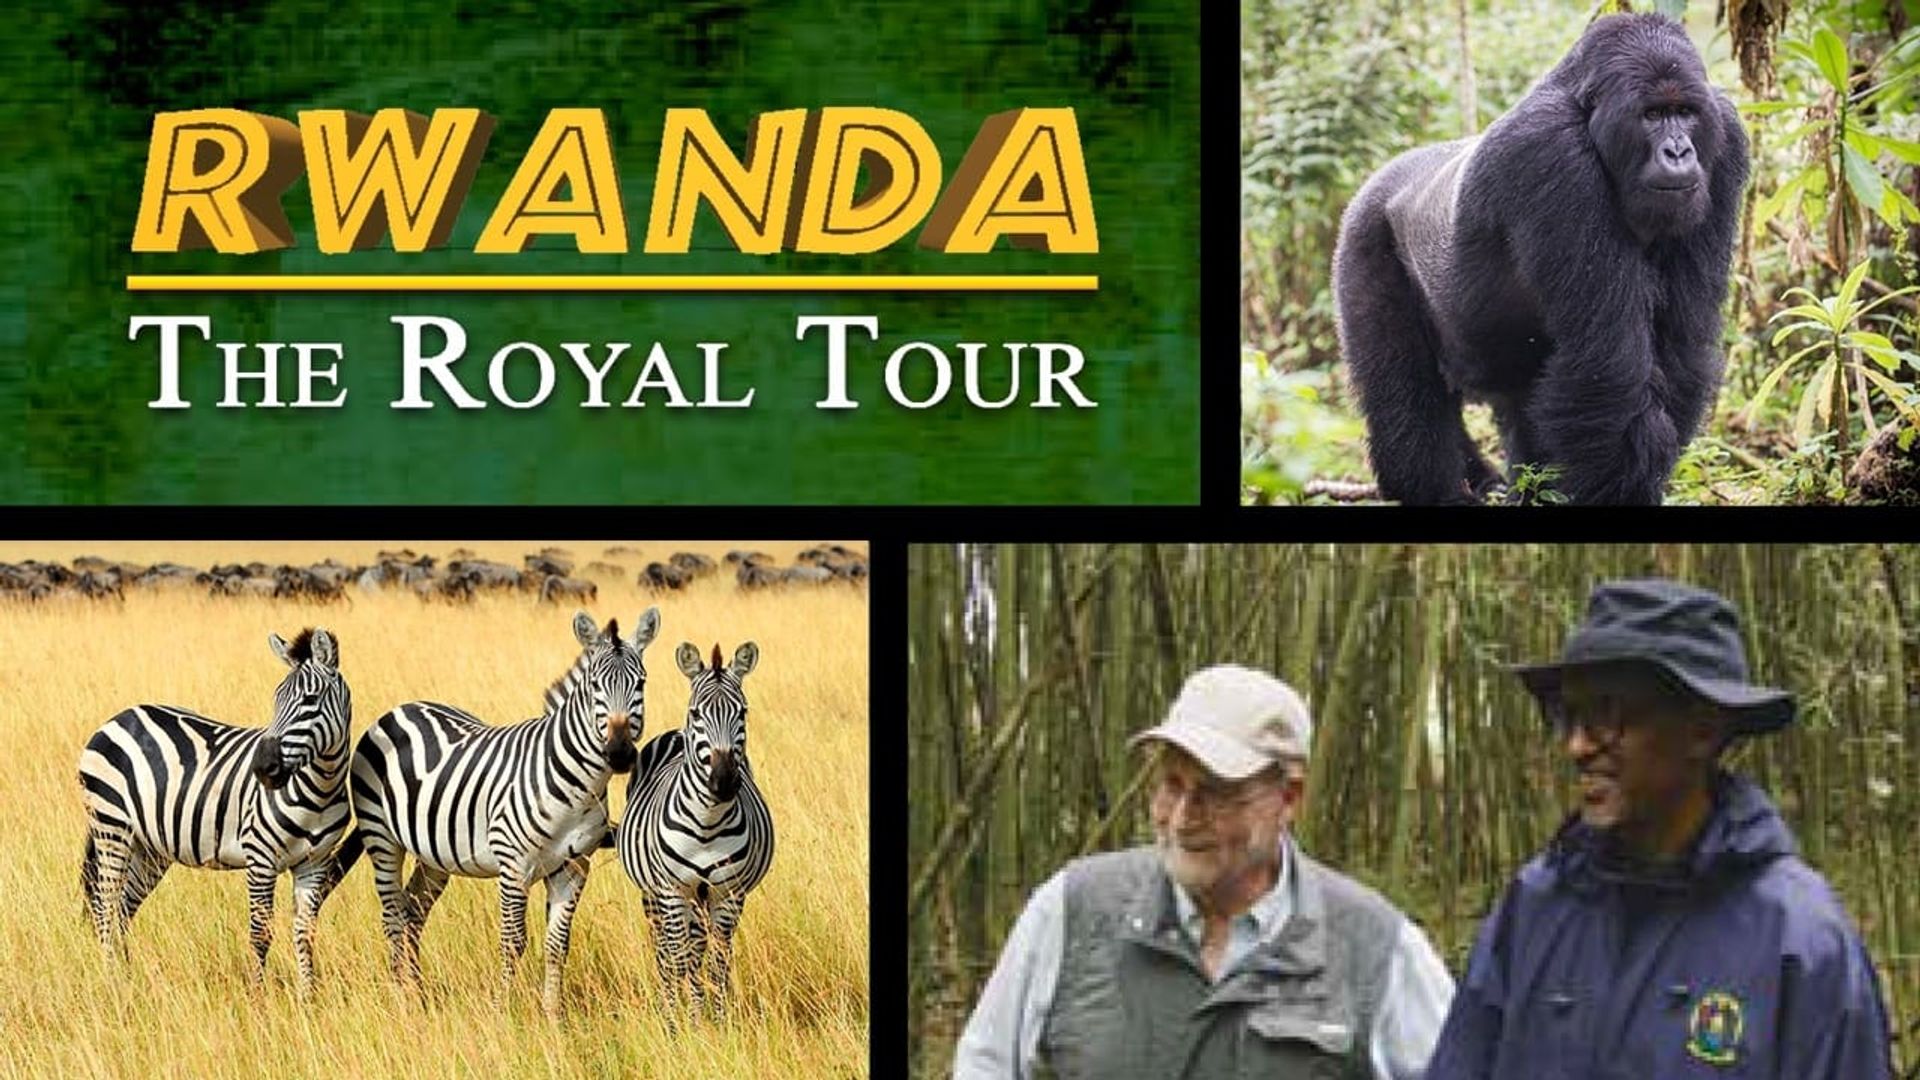 Rwanda: The Royal Tour background